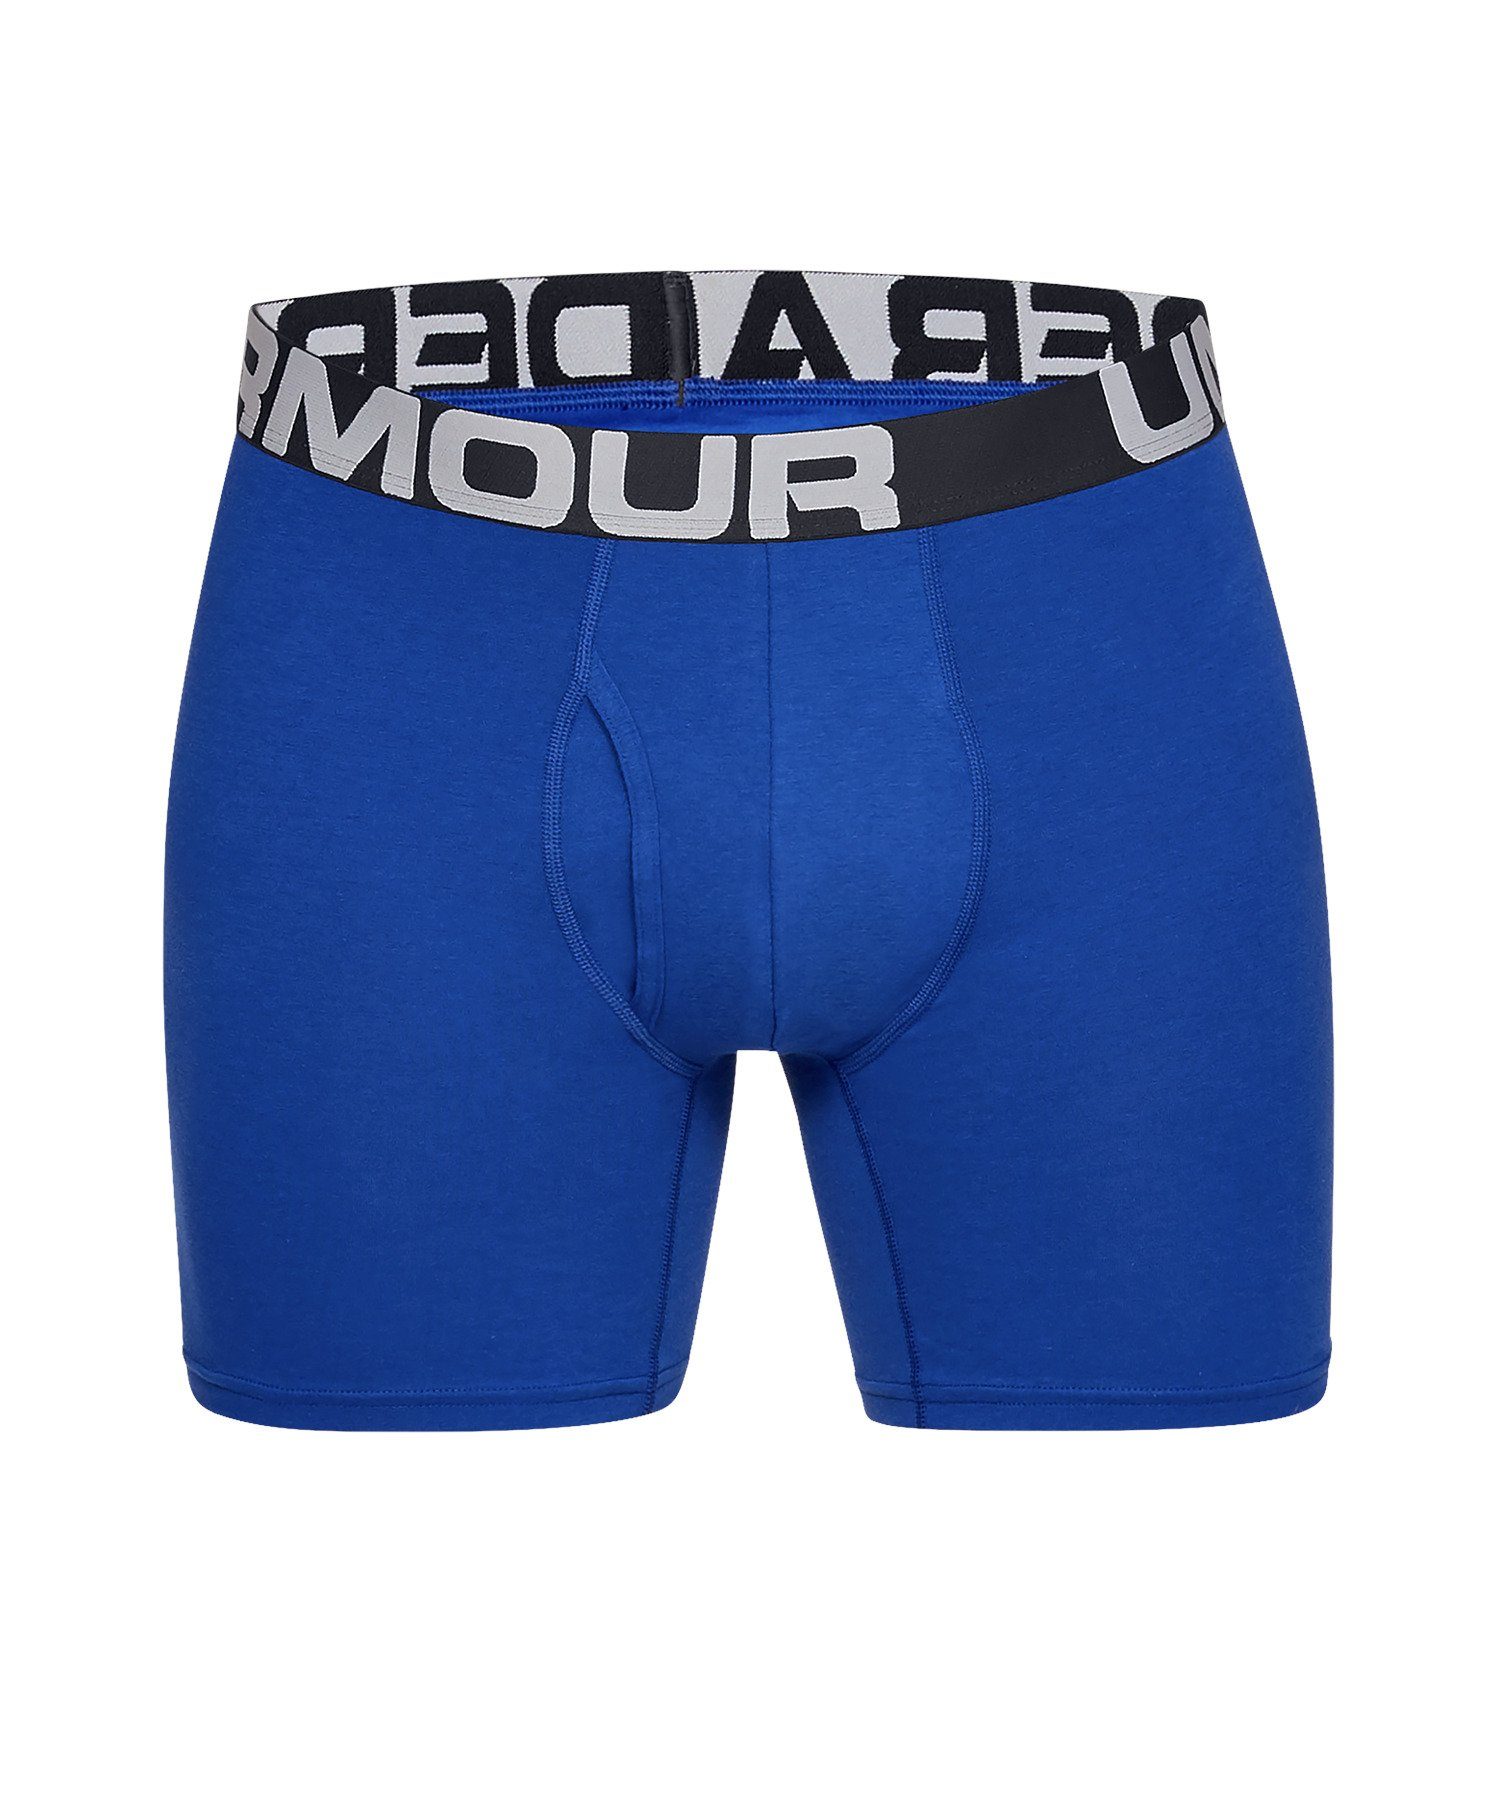 Under Armour® Boxershorts Charged Boxerjock Short 3er Pack default